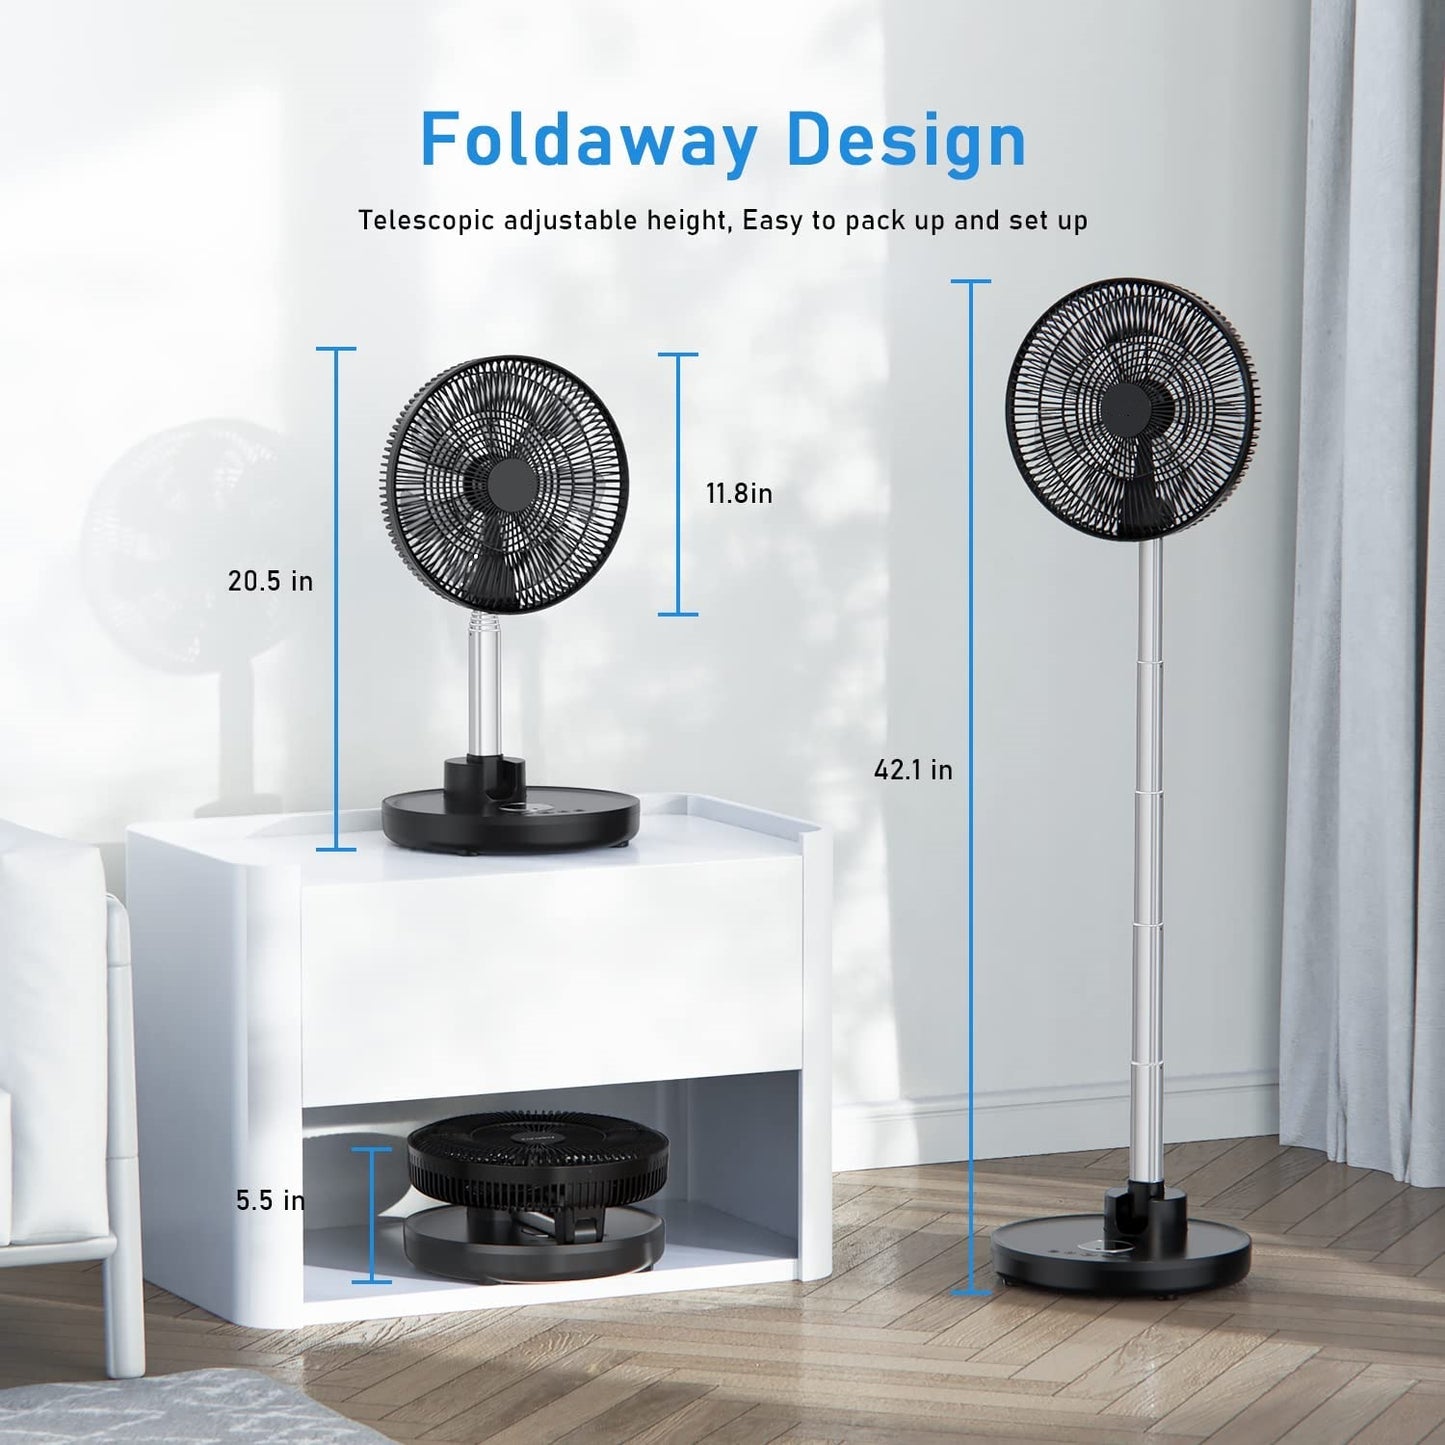 Foldaway Versatile Fan with Remote Control and Powerful Battery - مروحة متعددة الاستخدامات قابلة للطي مع تحكم عن بُعد وبطارية قوية